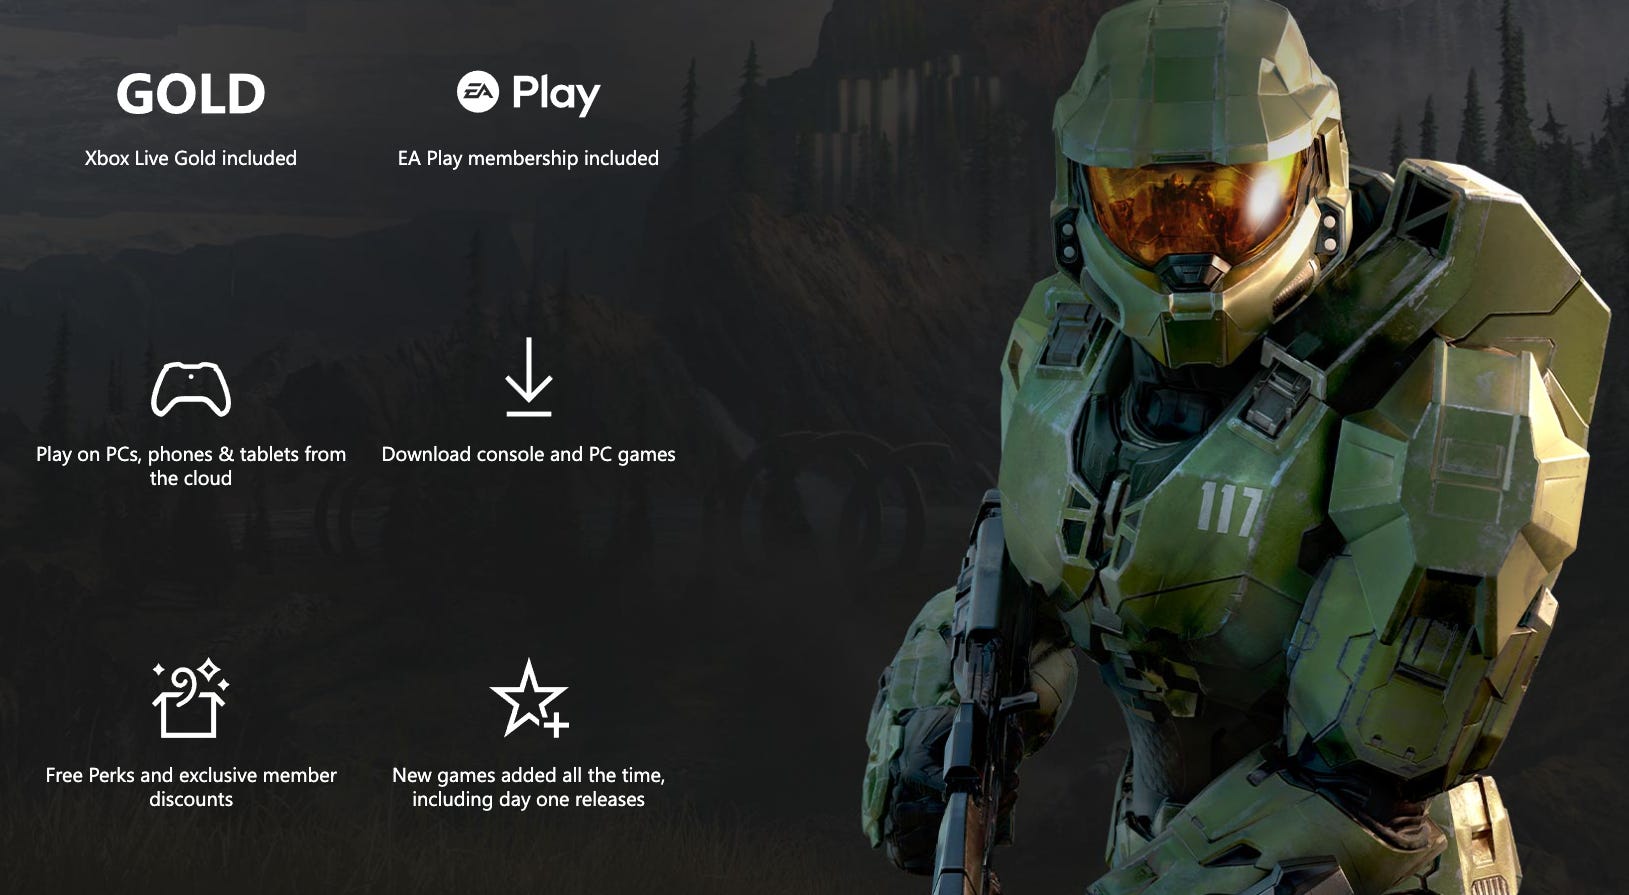 Microsoft Xbox Game Pass 6-Month Membership (Digital Code